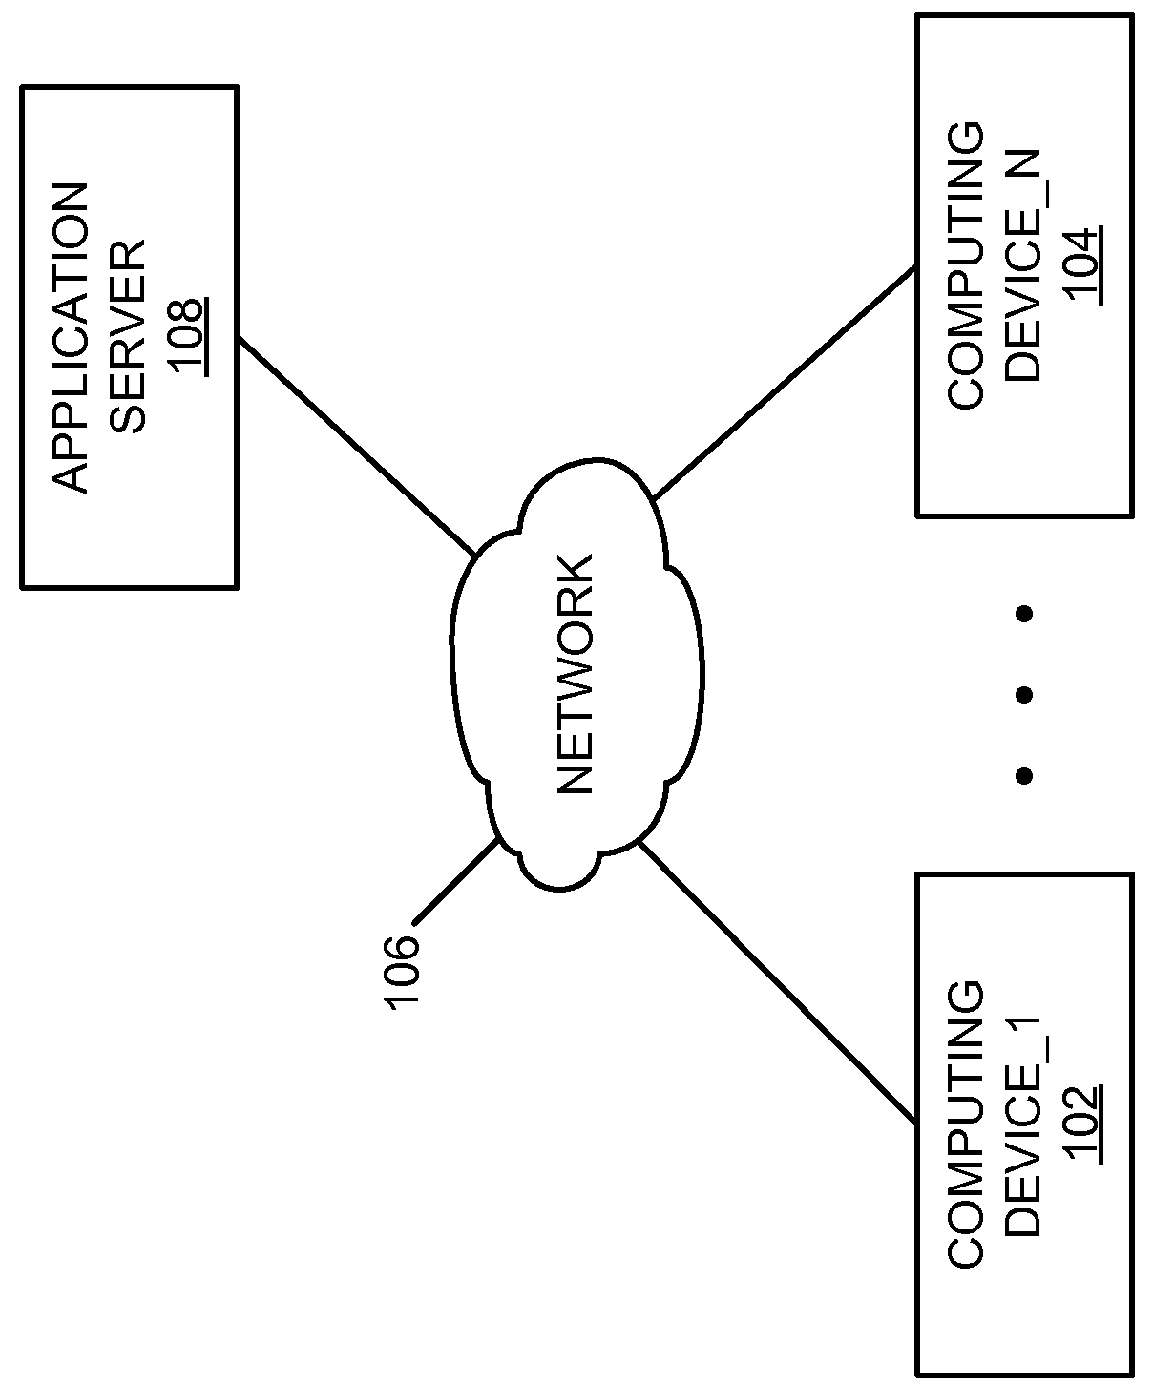 Prevention of classloader memory leaks in multitier enterprise applications